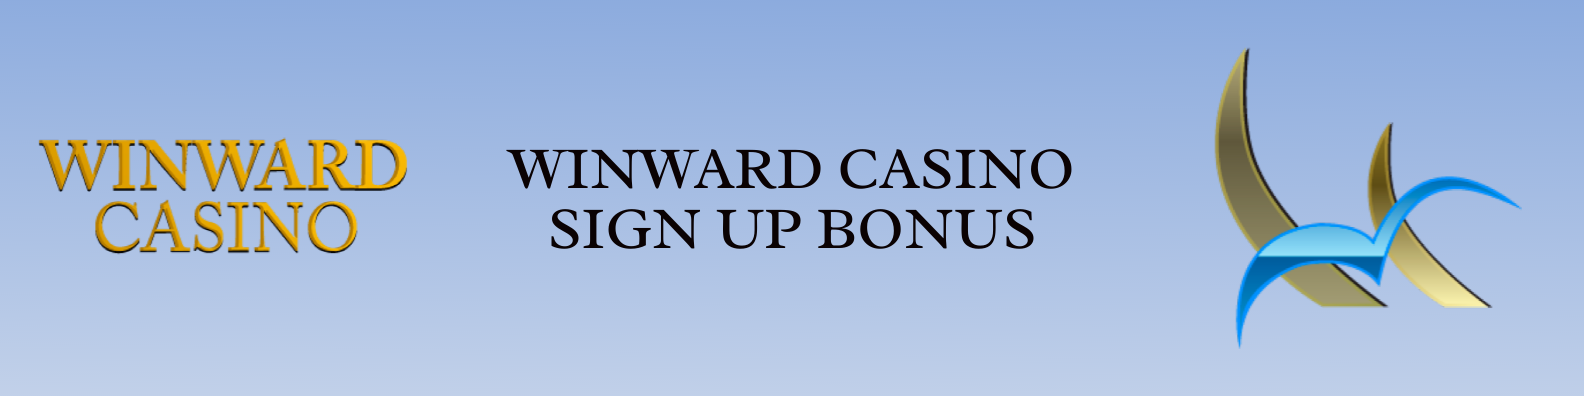 Winward Casino Sign Up Bonus